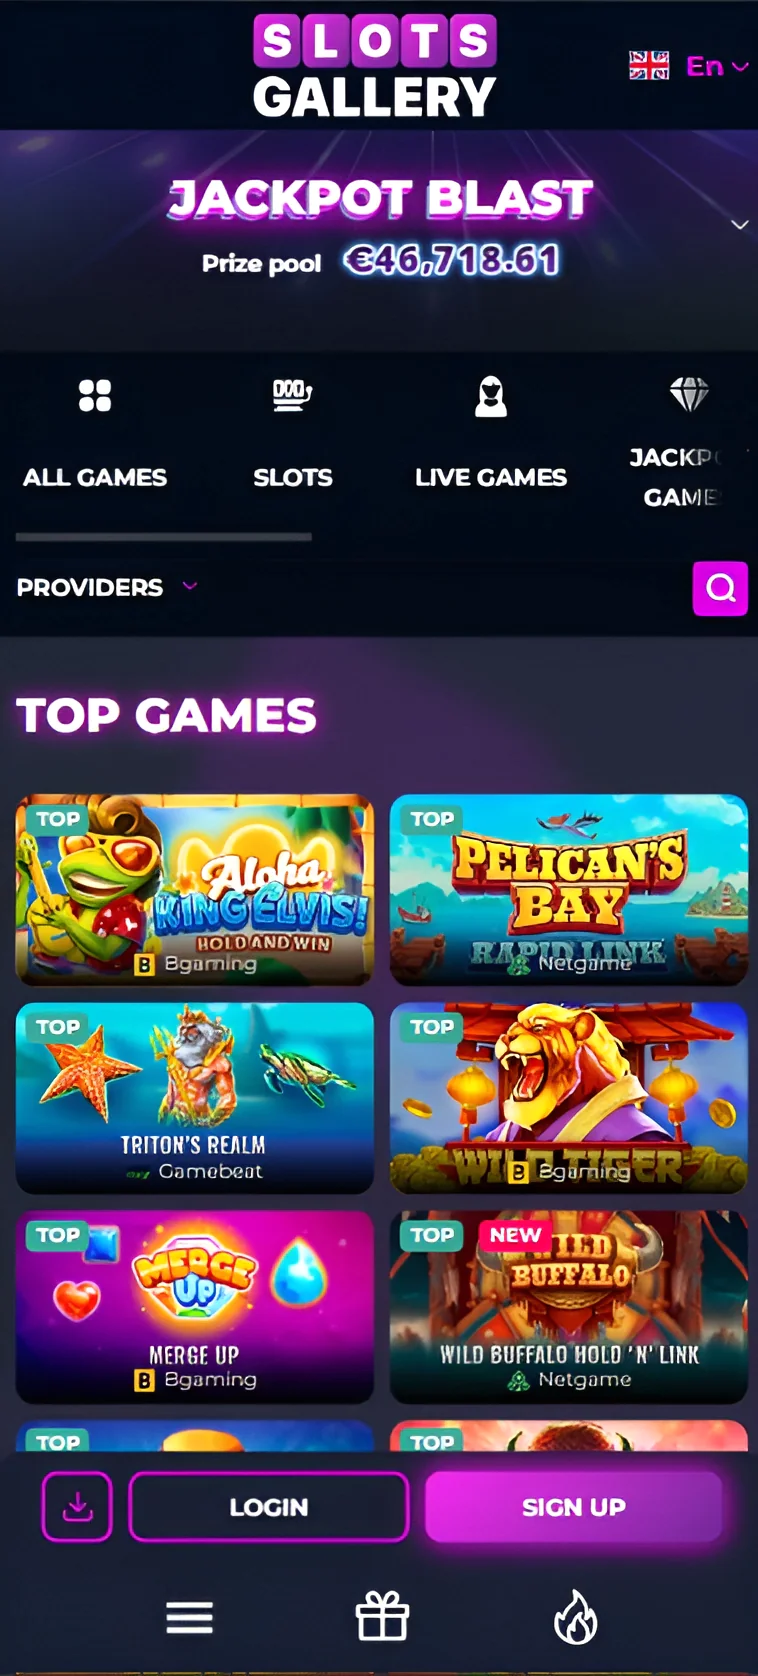 Popular slots in the Mobile App